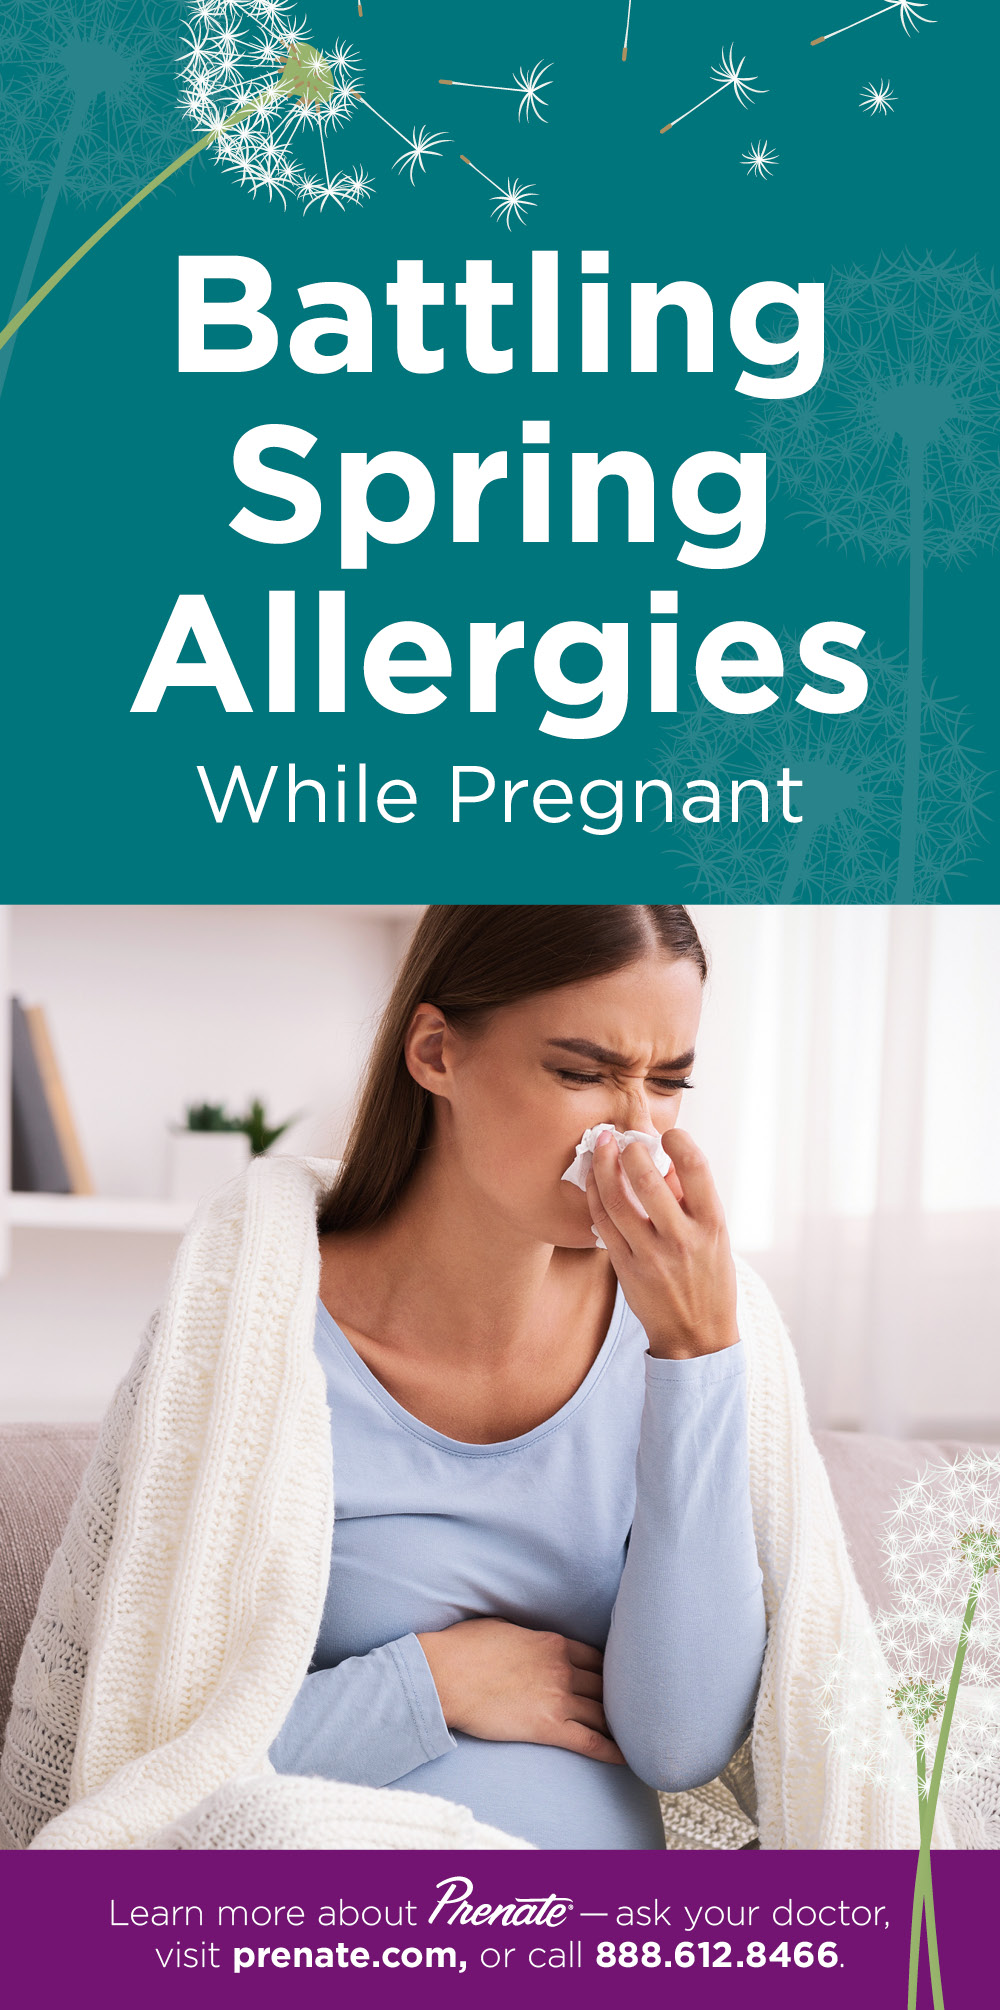 Battling Spring Allergies graphic